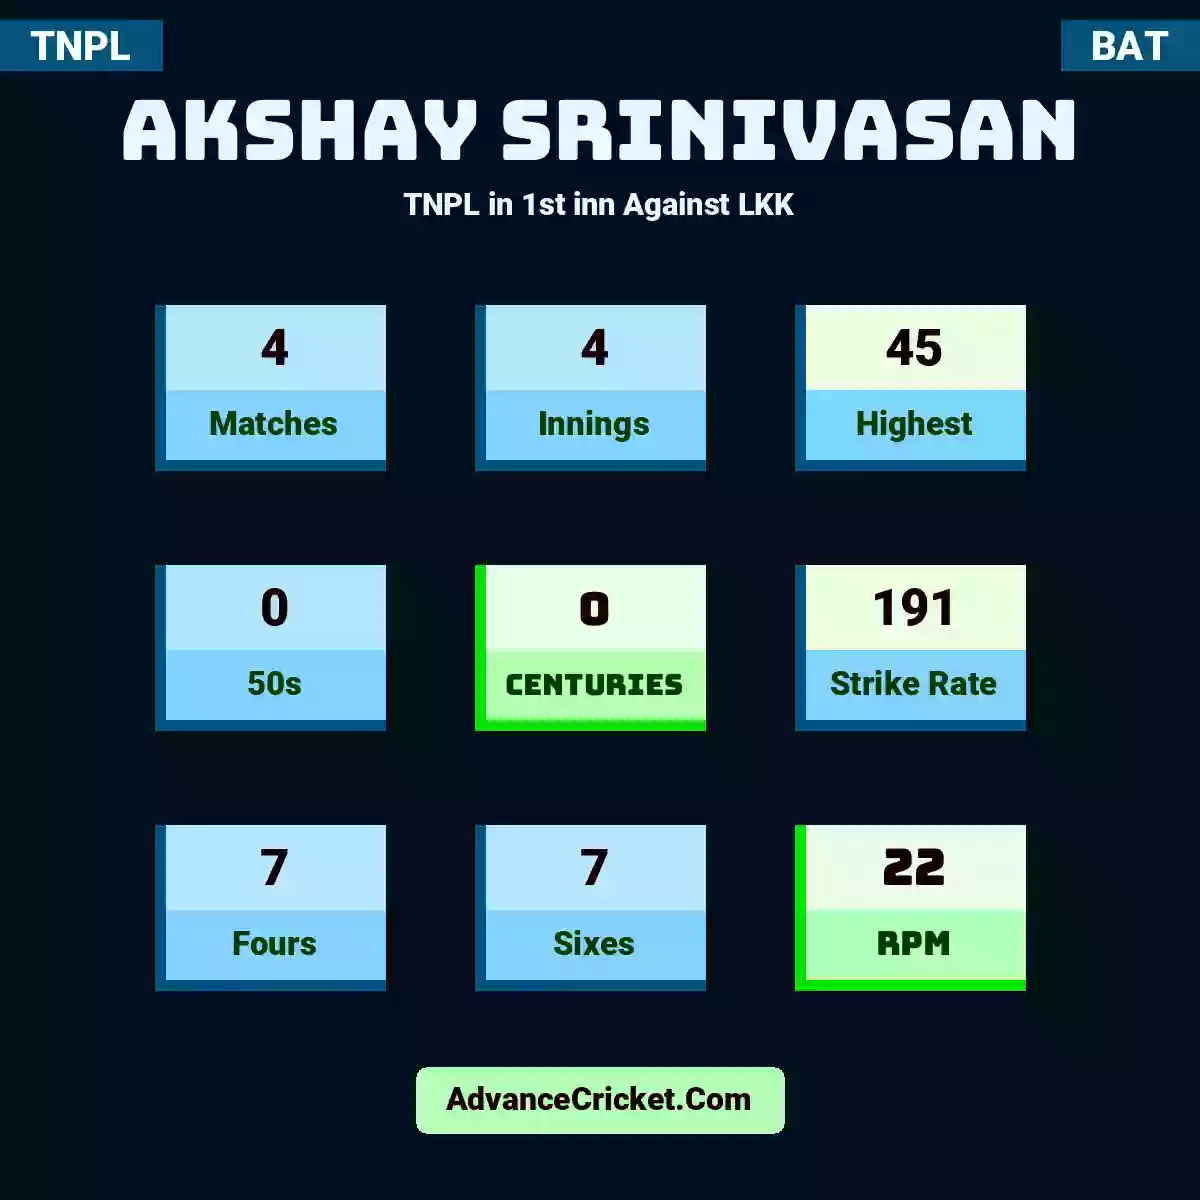 Akshay Srinivasan TNPL  in 1st inn Against LKK, Akshay Srinivasan played 4 matches, scored 45 runs as highest, 0 half-centuries, and 0 centuries, with a strike rate of 191. A.Srinivasan hit 7 fours and 7 sixes, with an RPM of 22.